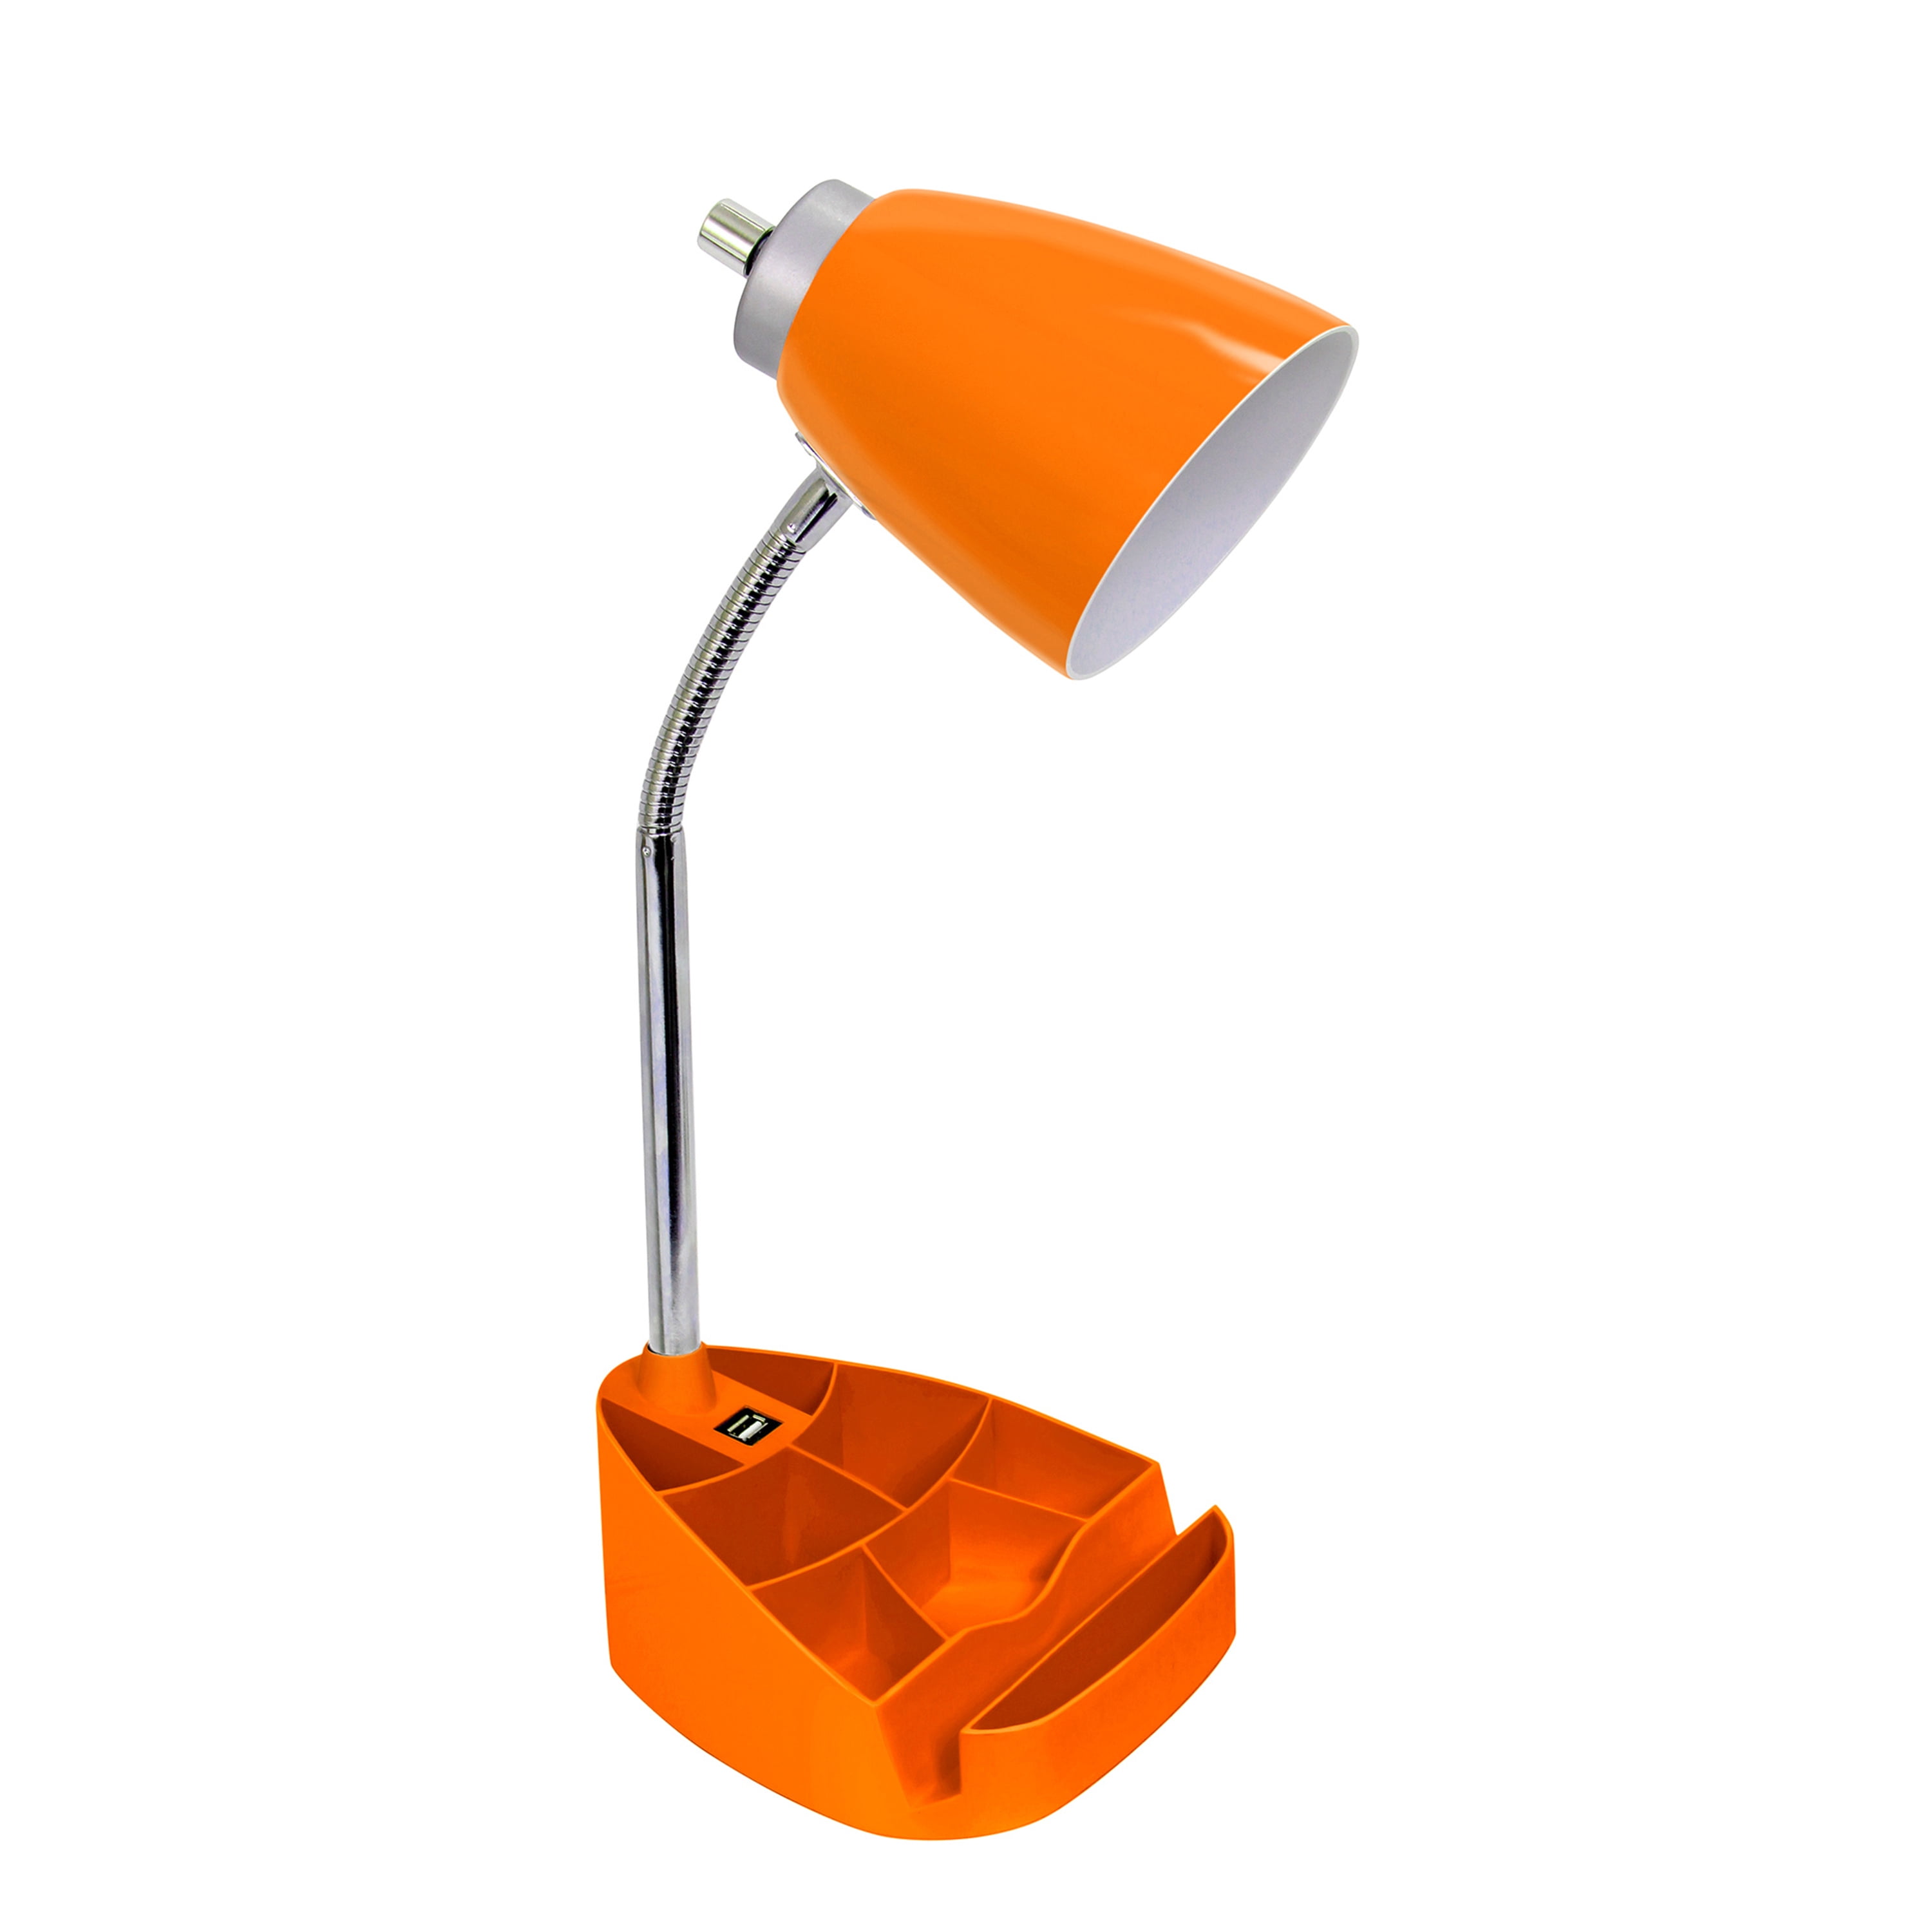 Ld1056-org Gooseneck Organizer Desk Lamp With Ipad Tablet Stand Book Holder & Usb Port, Orange